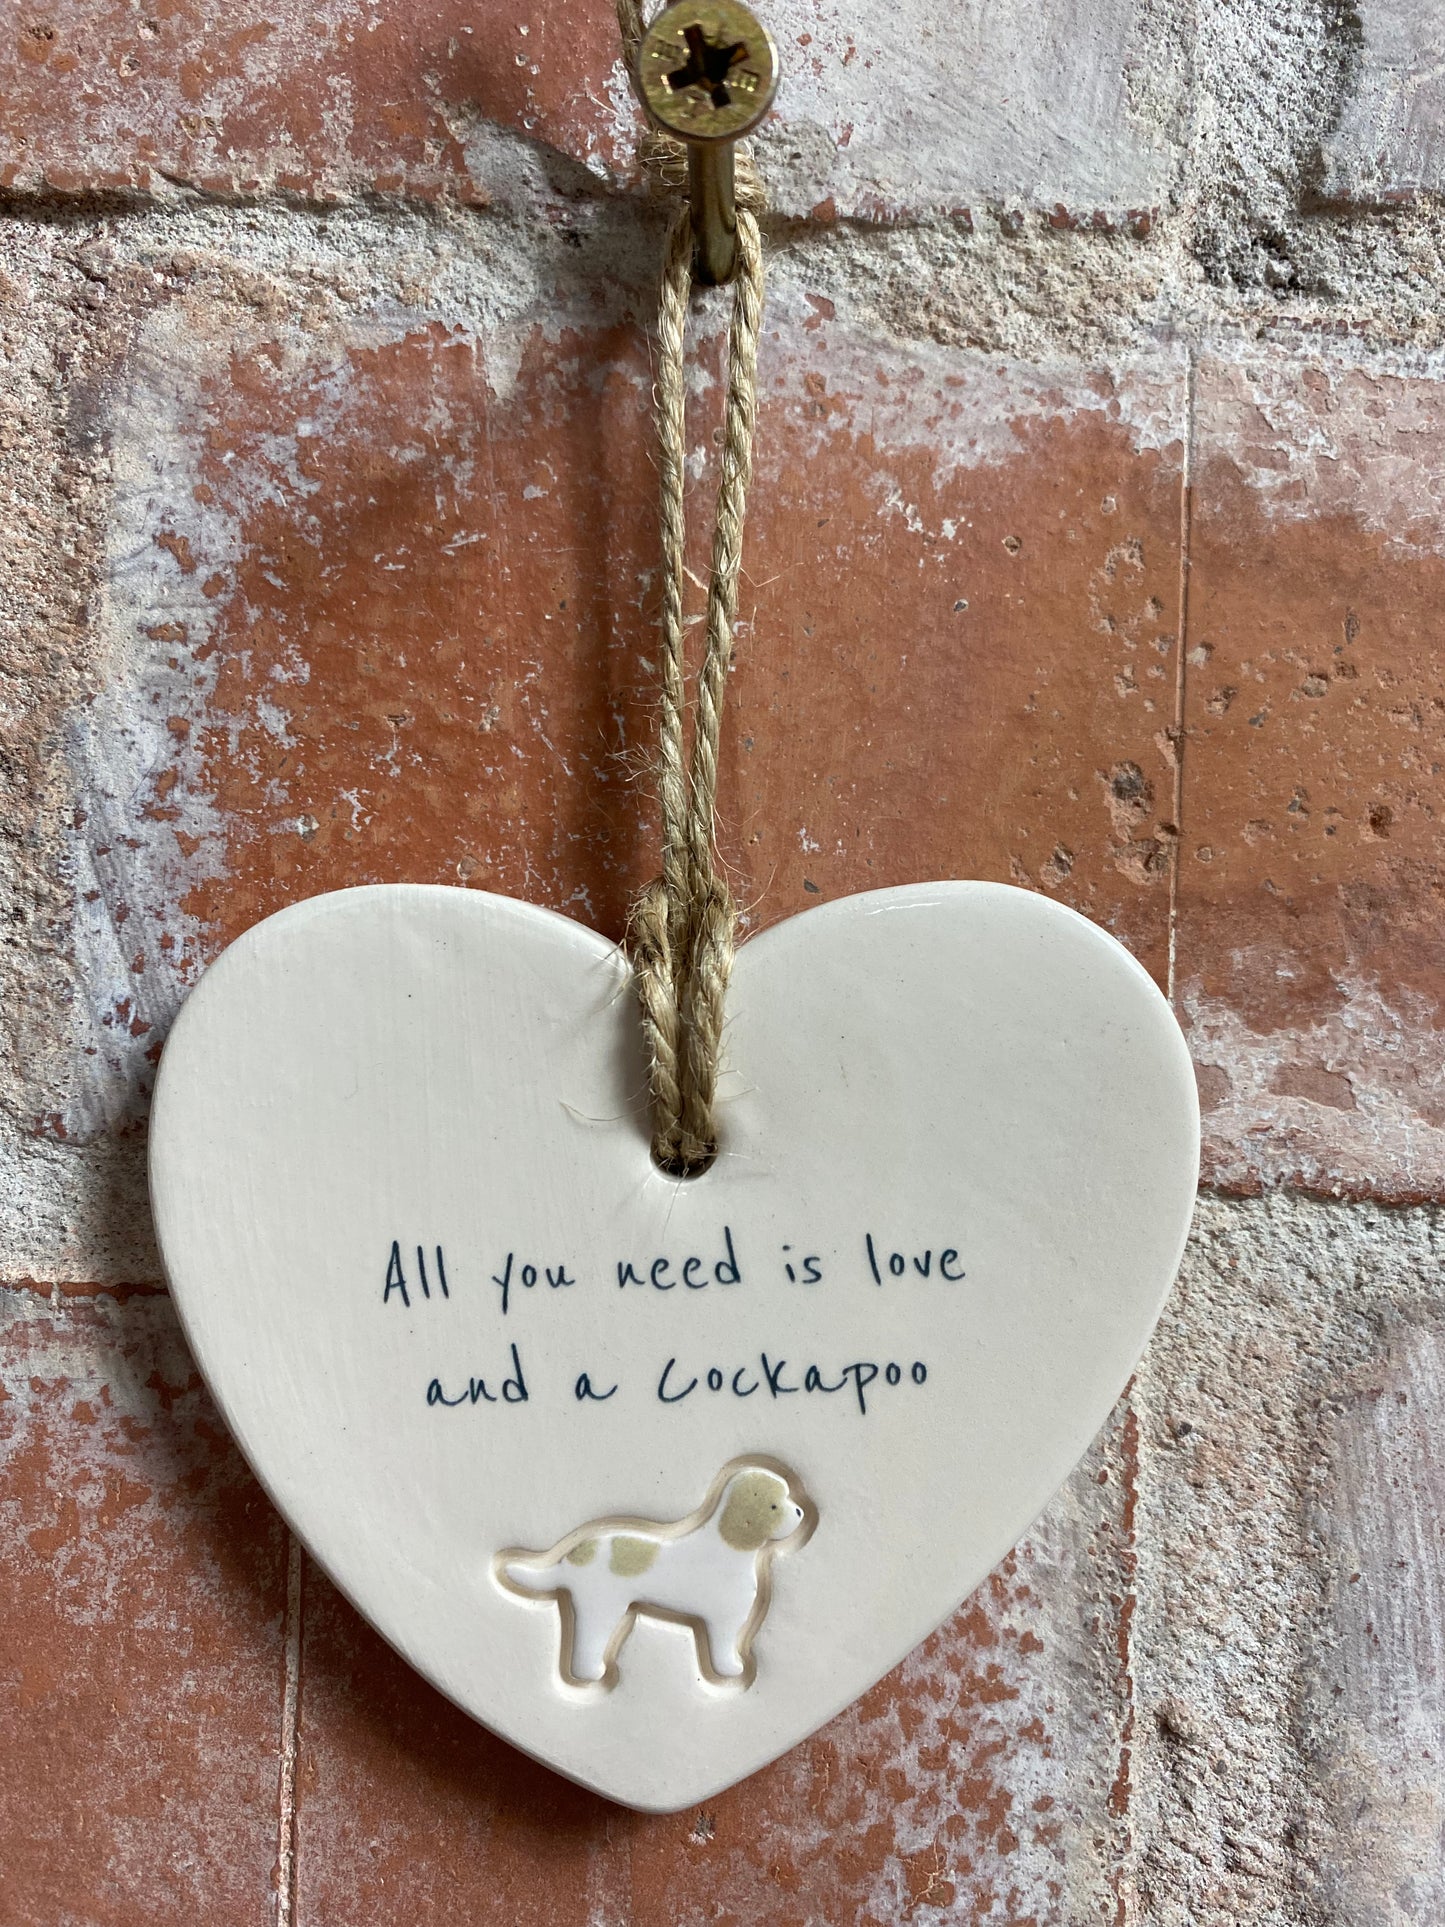 Cockapoo ceramic heart